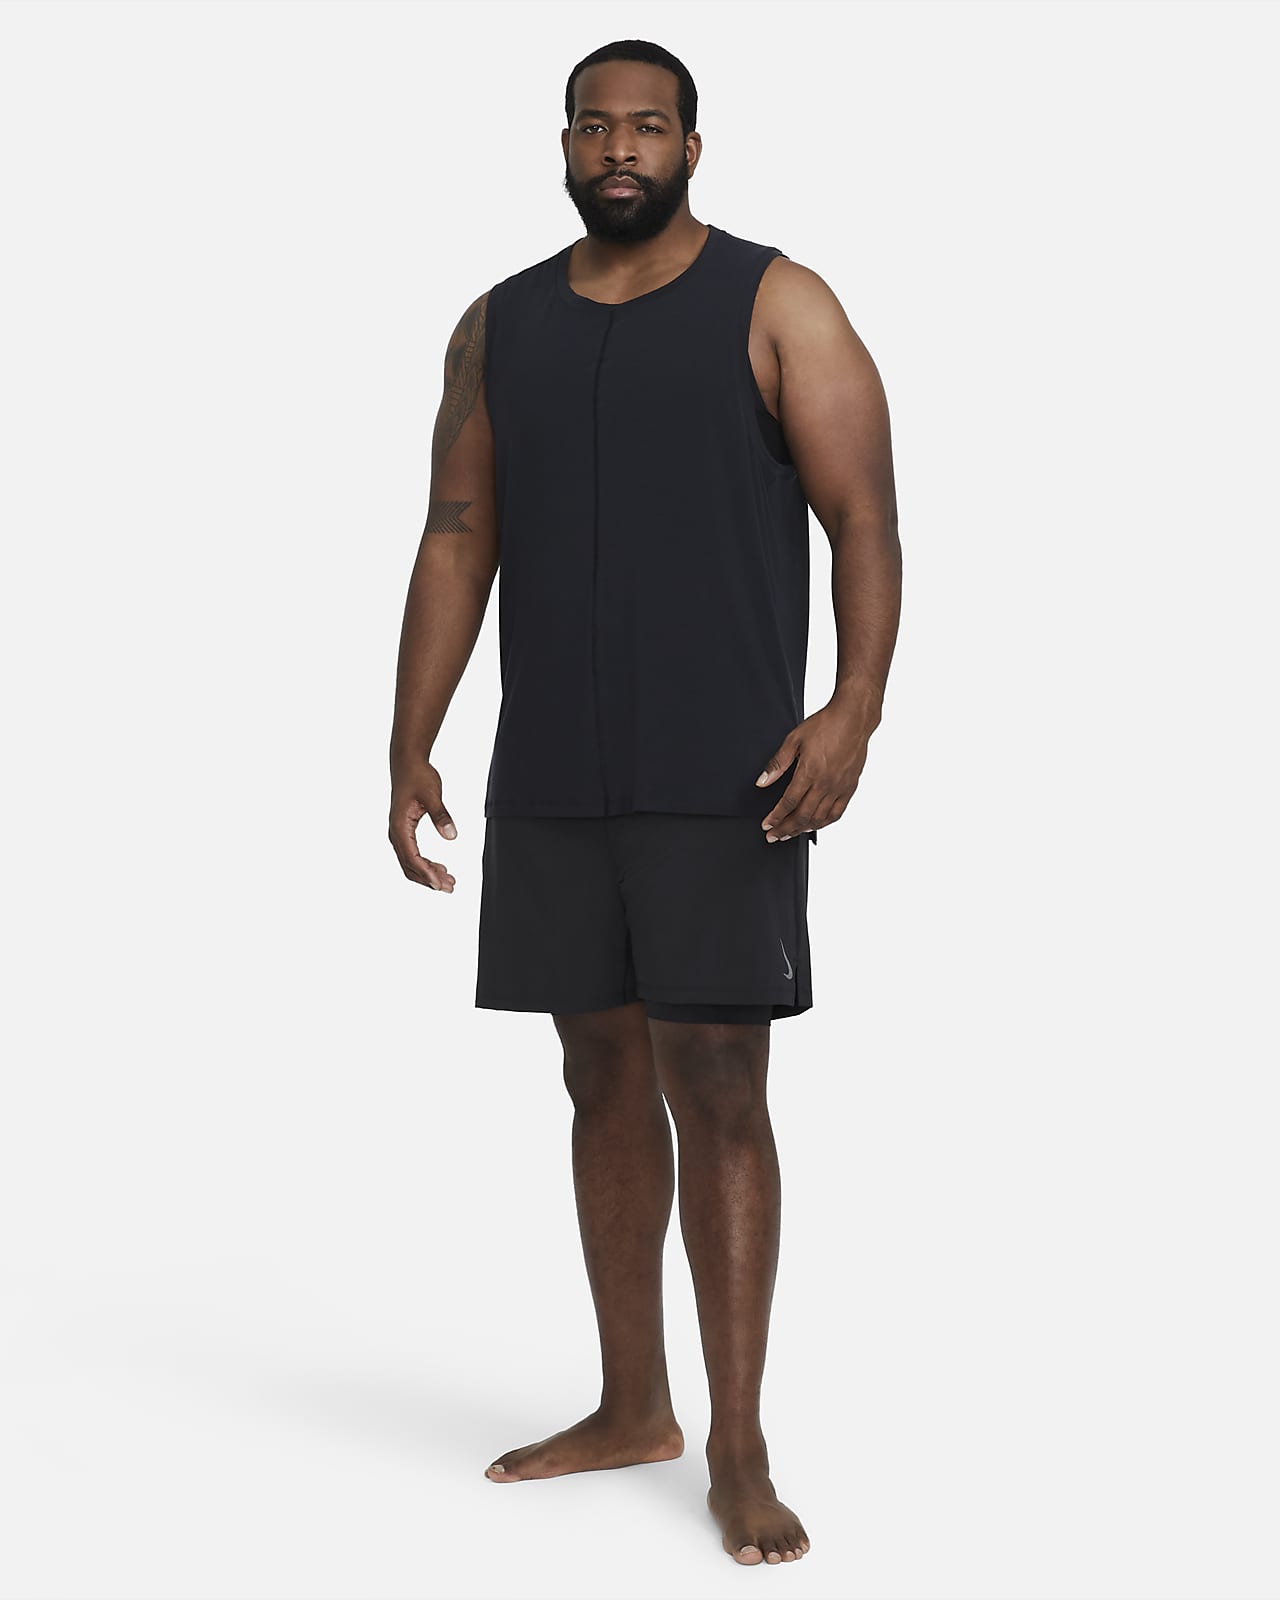 Men's Yoga Clothing. Nike IN